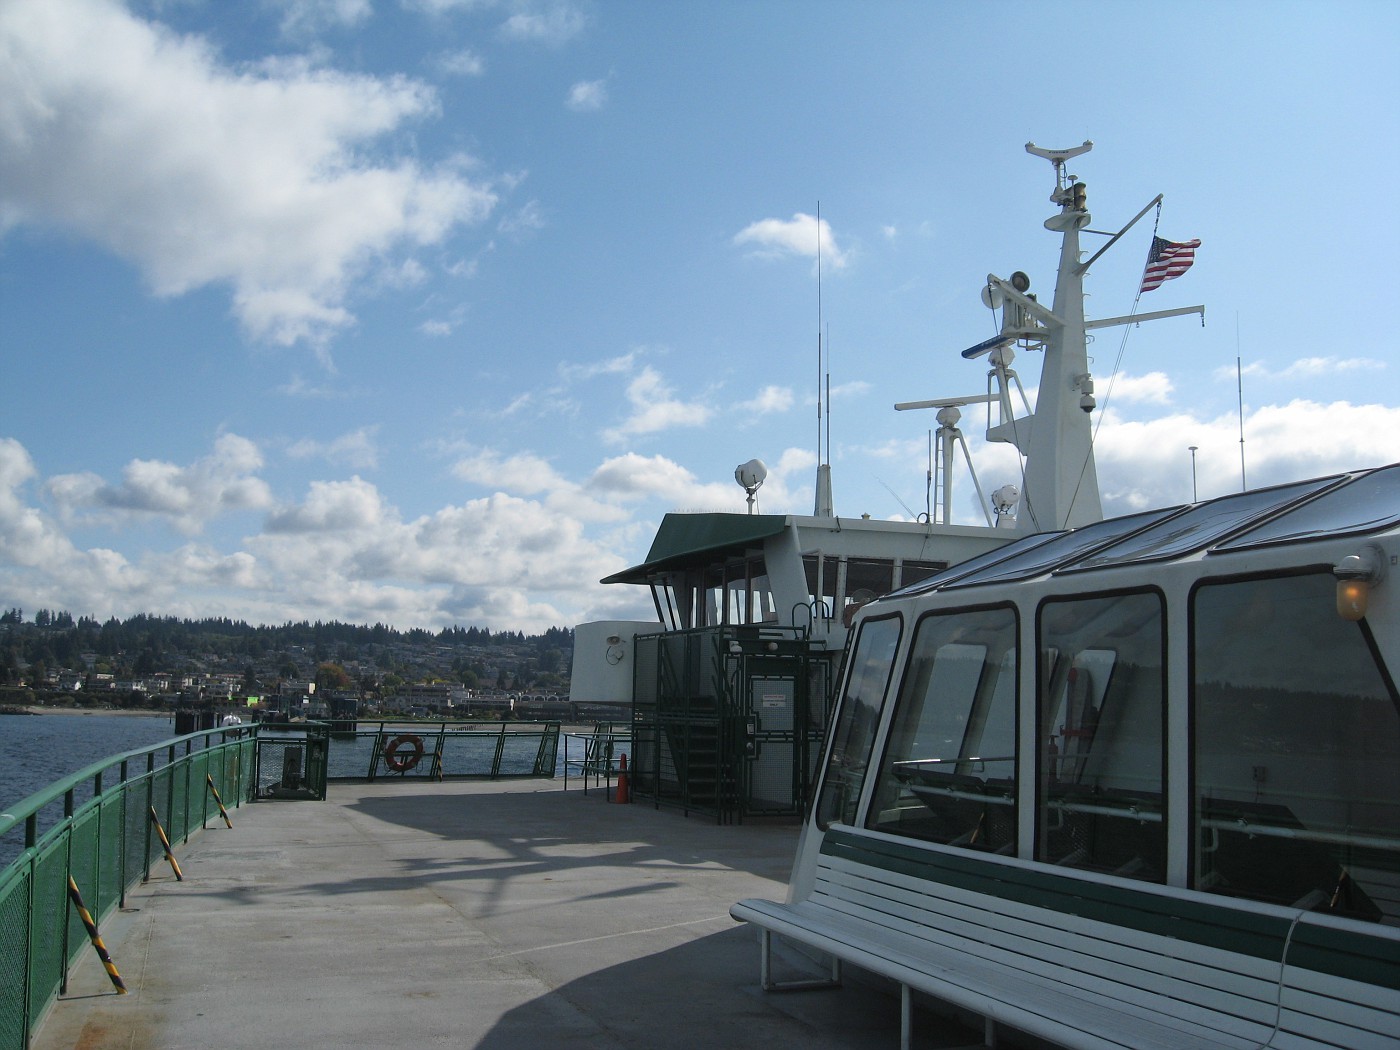 Pugest Sound ferry